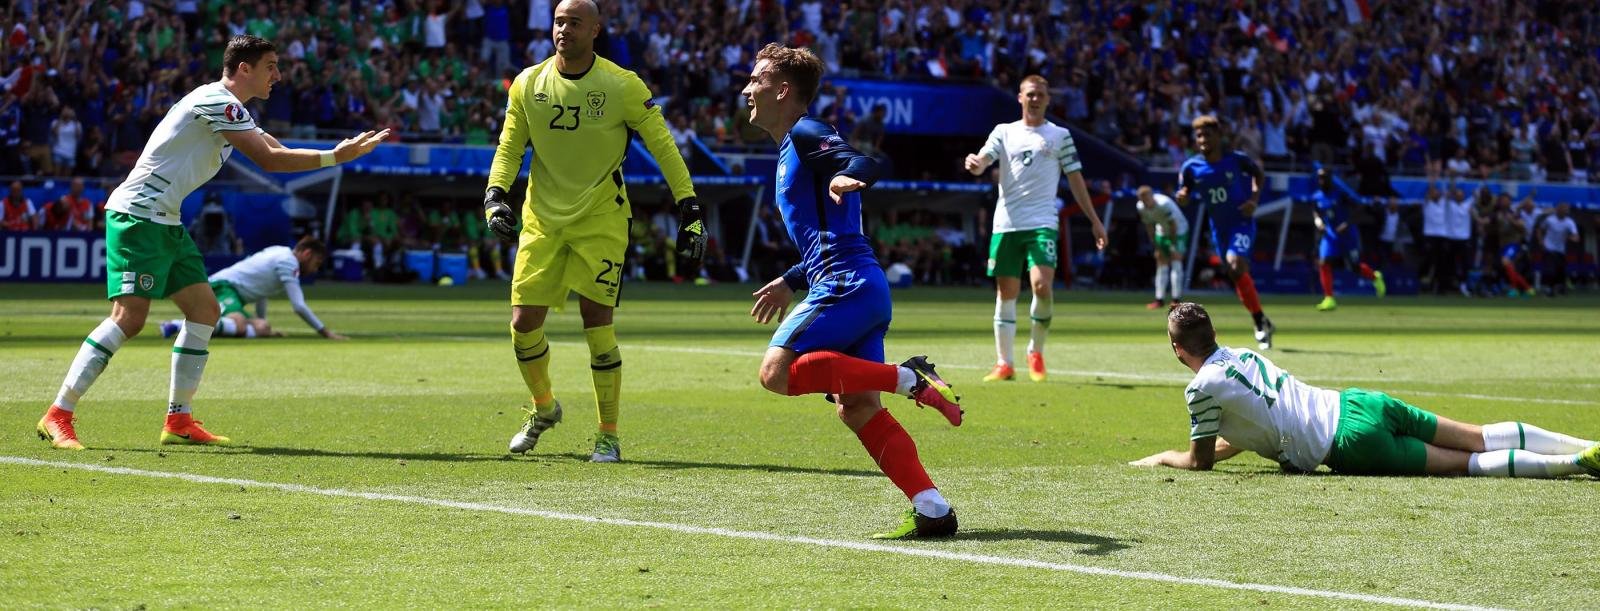 France 2-1 Republic of Ireland: EURO 2016 Round of 16 Report